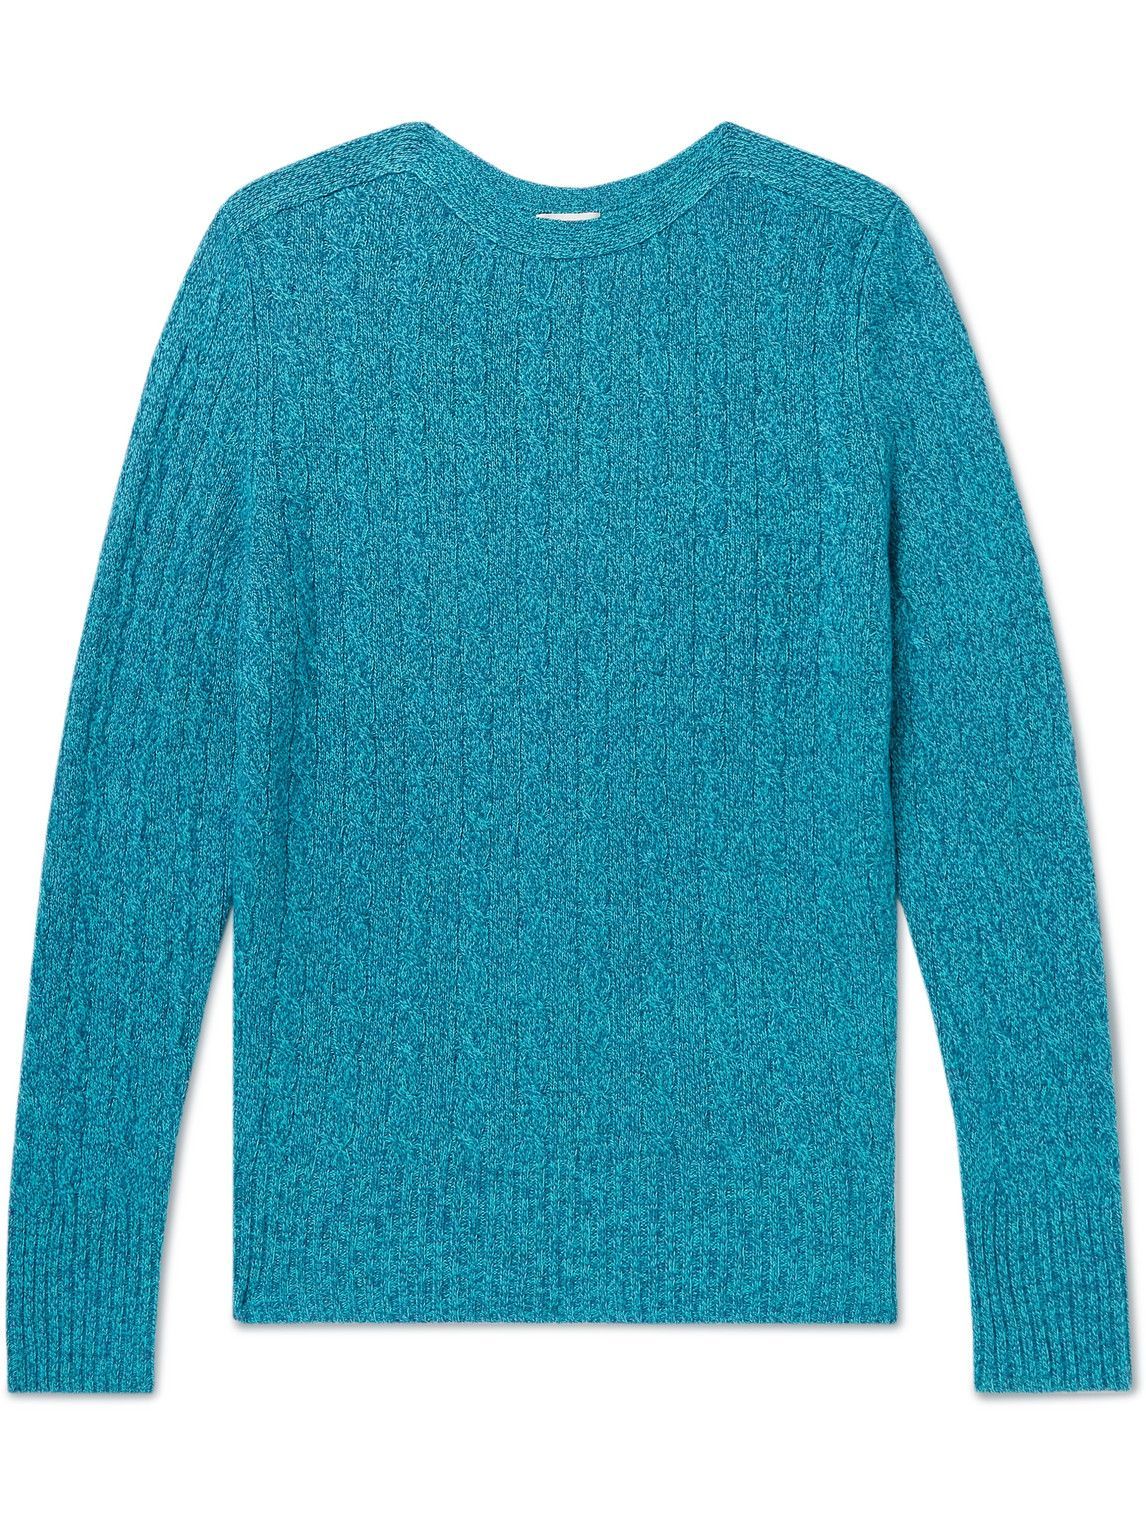 ERDEM - Dante Cable-Knit Sweater - Blue Erdem